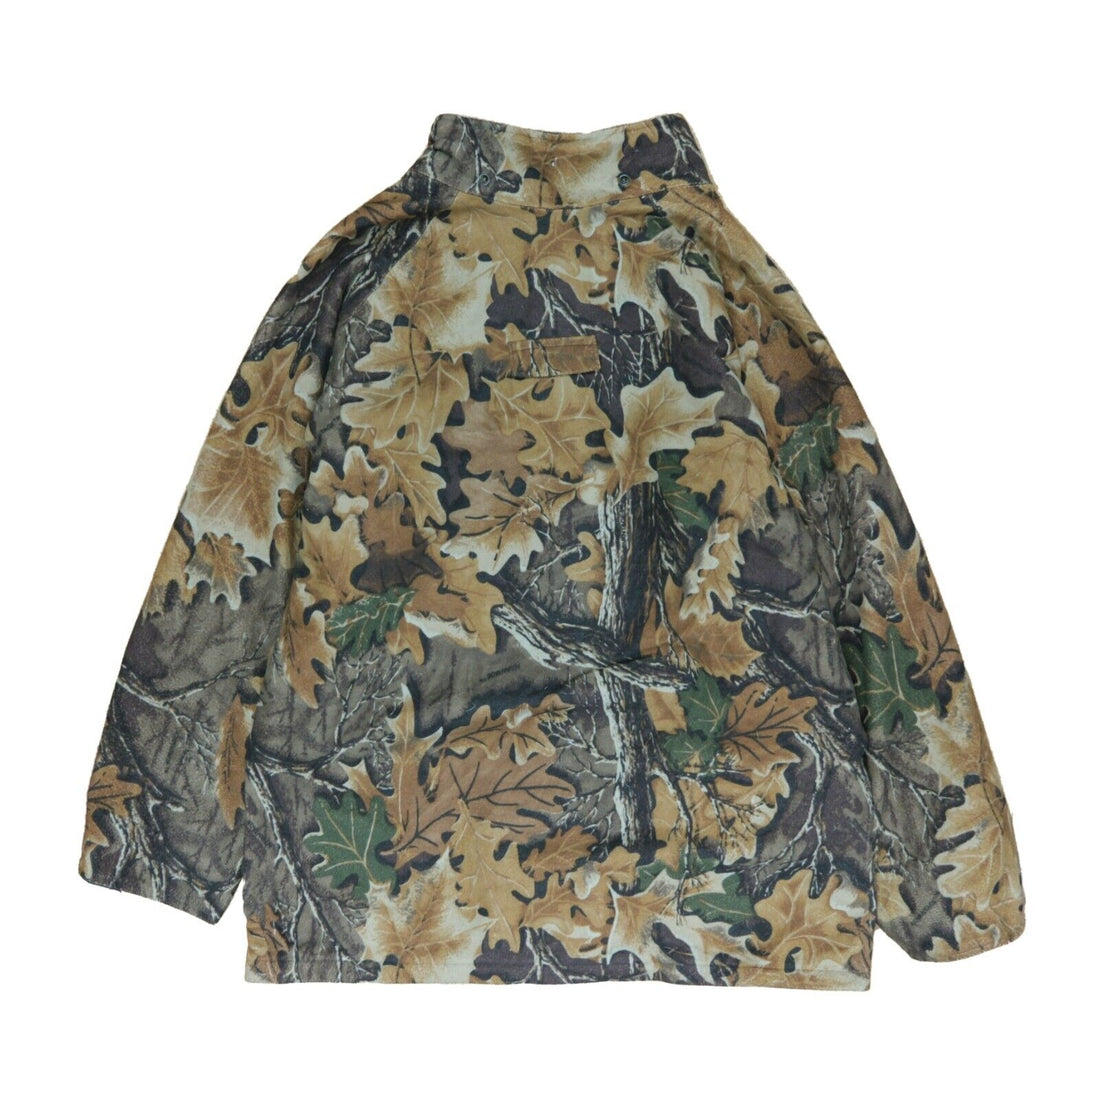 Vintage LL Bean Advantage Camouflage Coat Jacket Size XL Leaf Camo